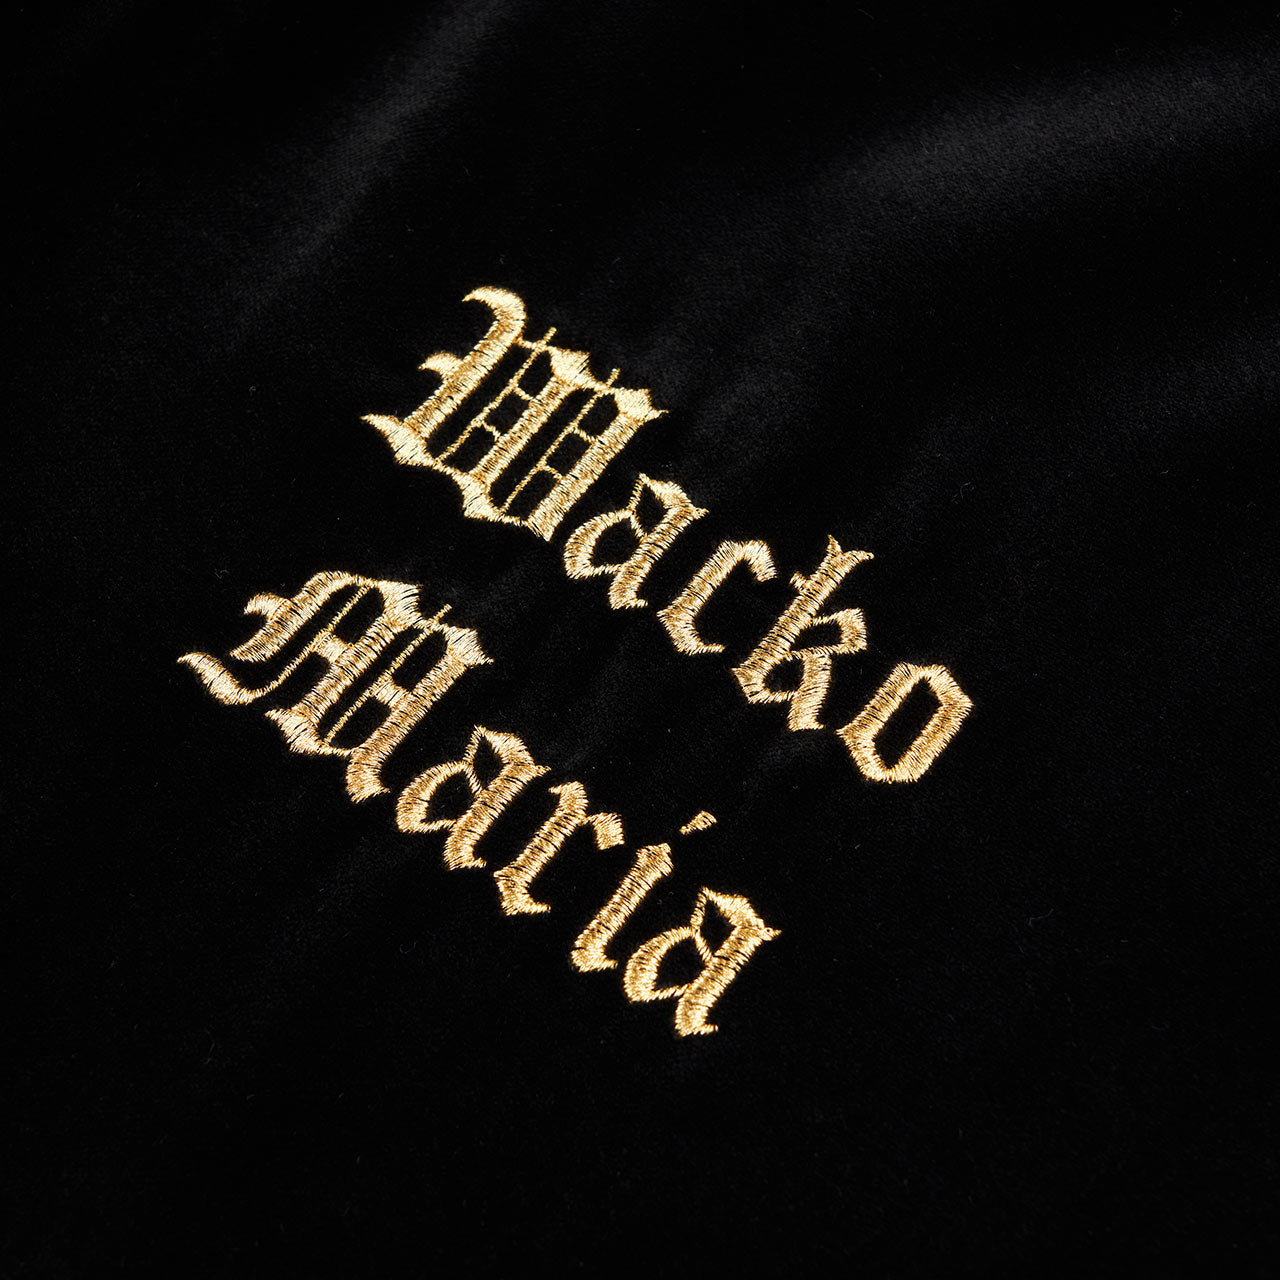 wacko maria wacko maria velvet jacket (black)